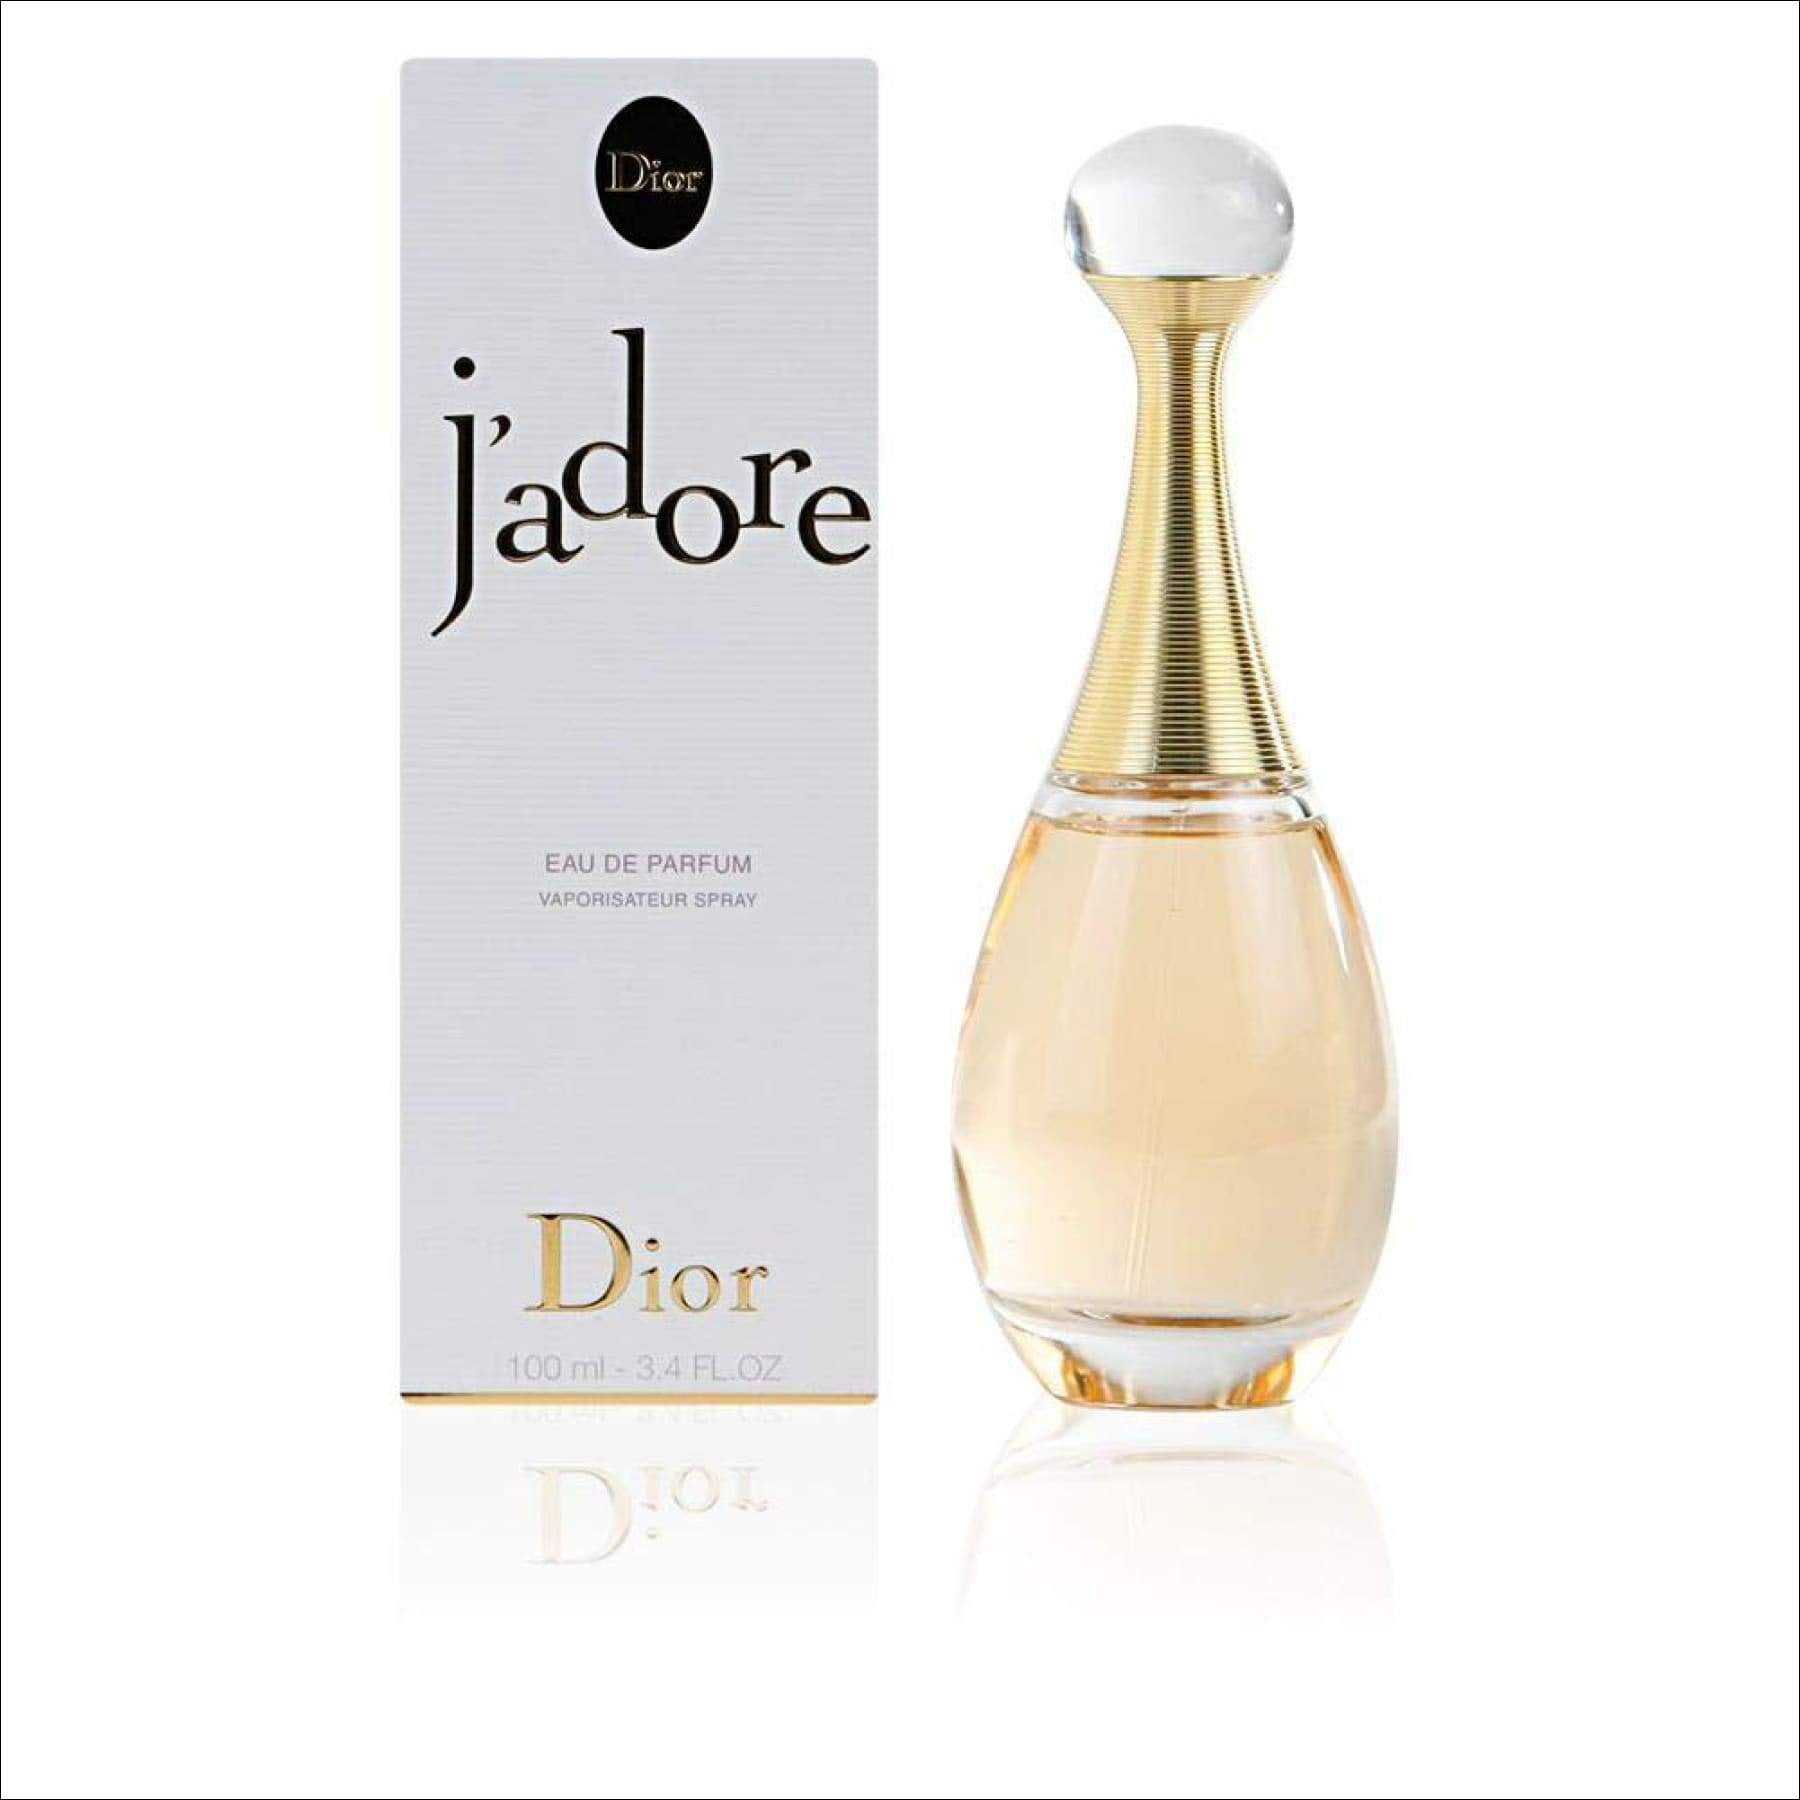 Dior jadore EDP100ml